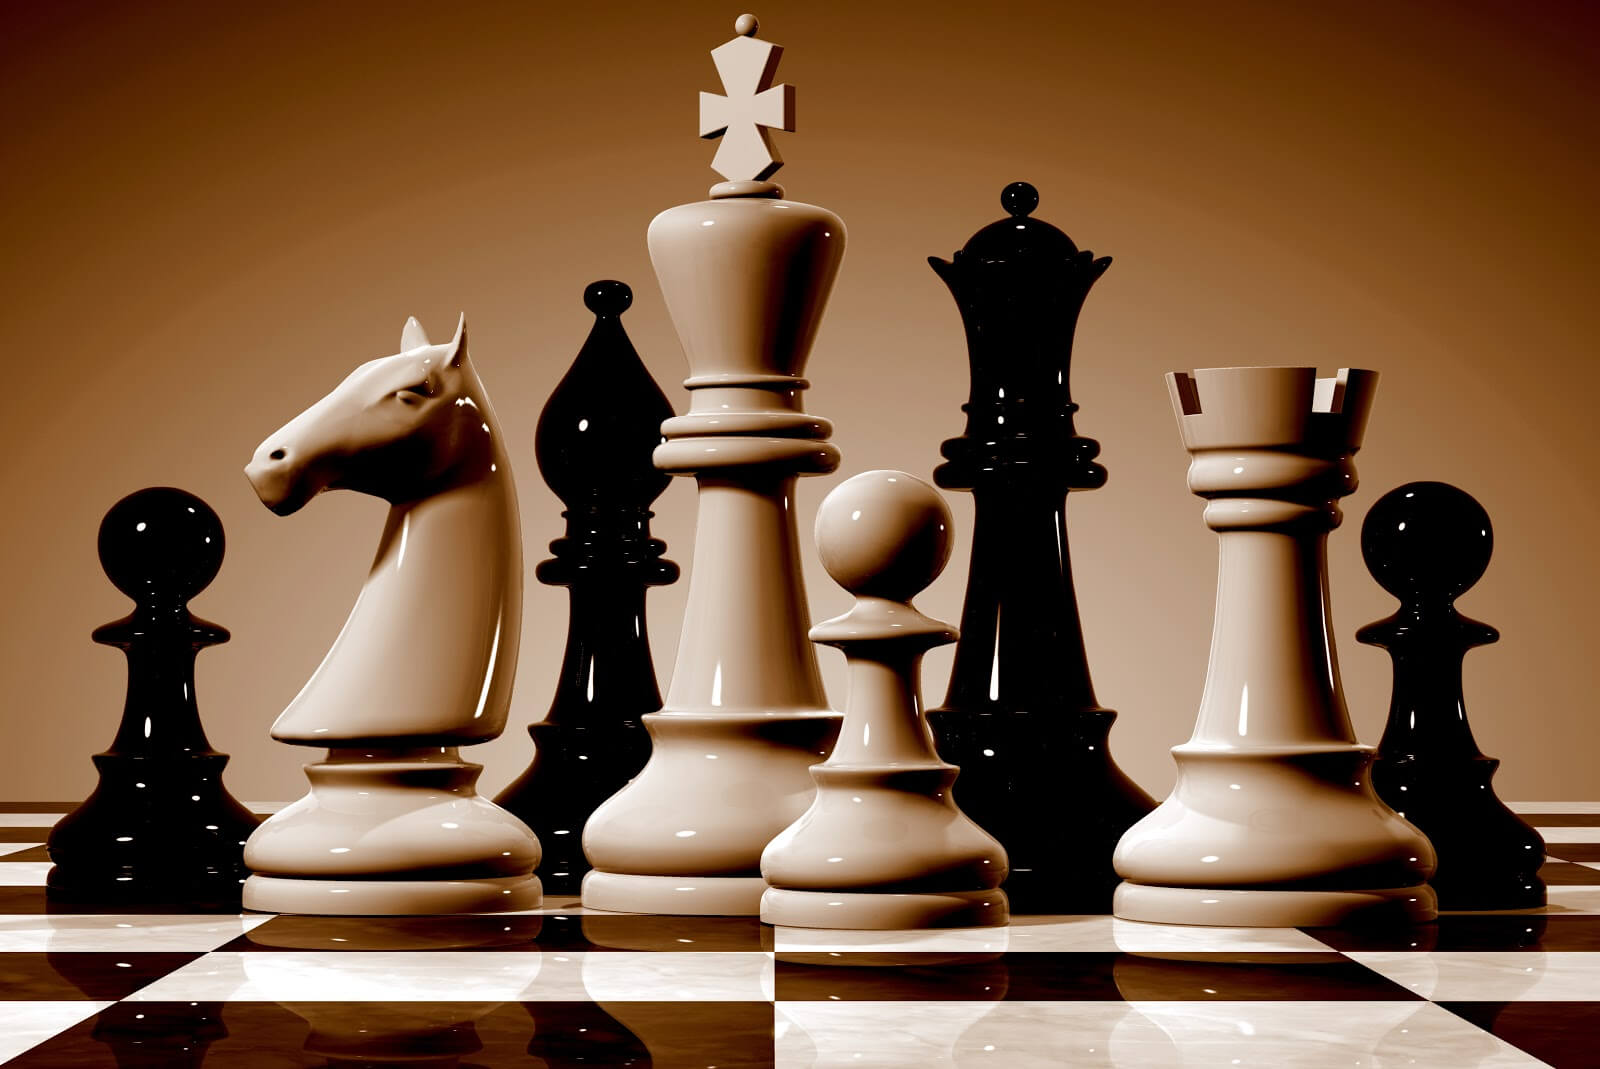 symbolism of chess - SRIA, Societas Rosicruciana In Anglia